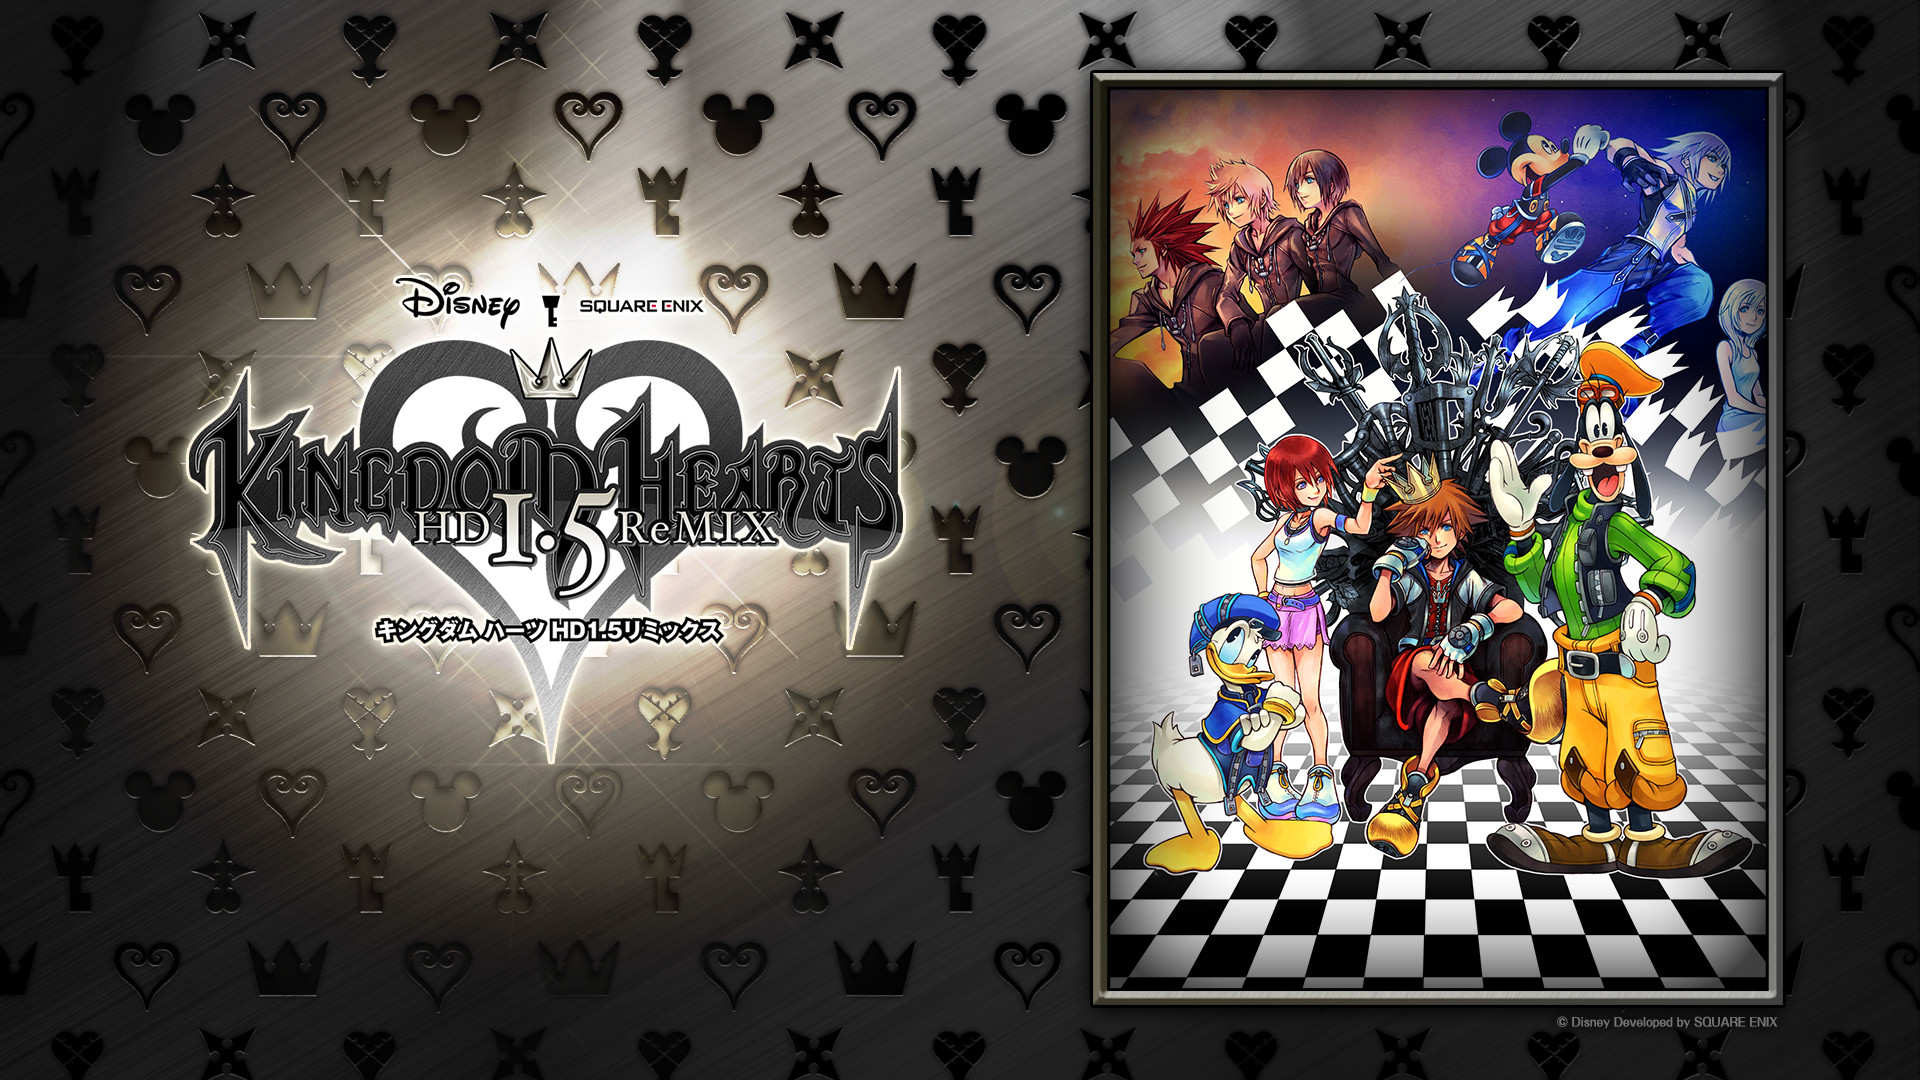 1920x1080 KINGDOM HEARTS -HD 1.5 ReMIX- Fan Campaign CM, Assorted Clips, & New  Wallpapers! - News - Kingdom Hearts Insider